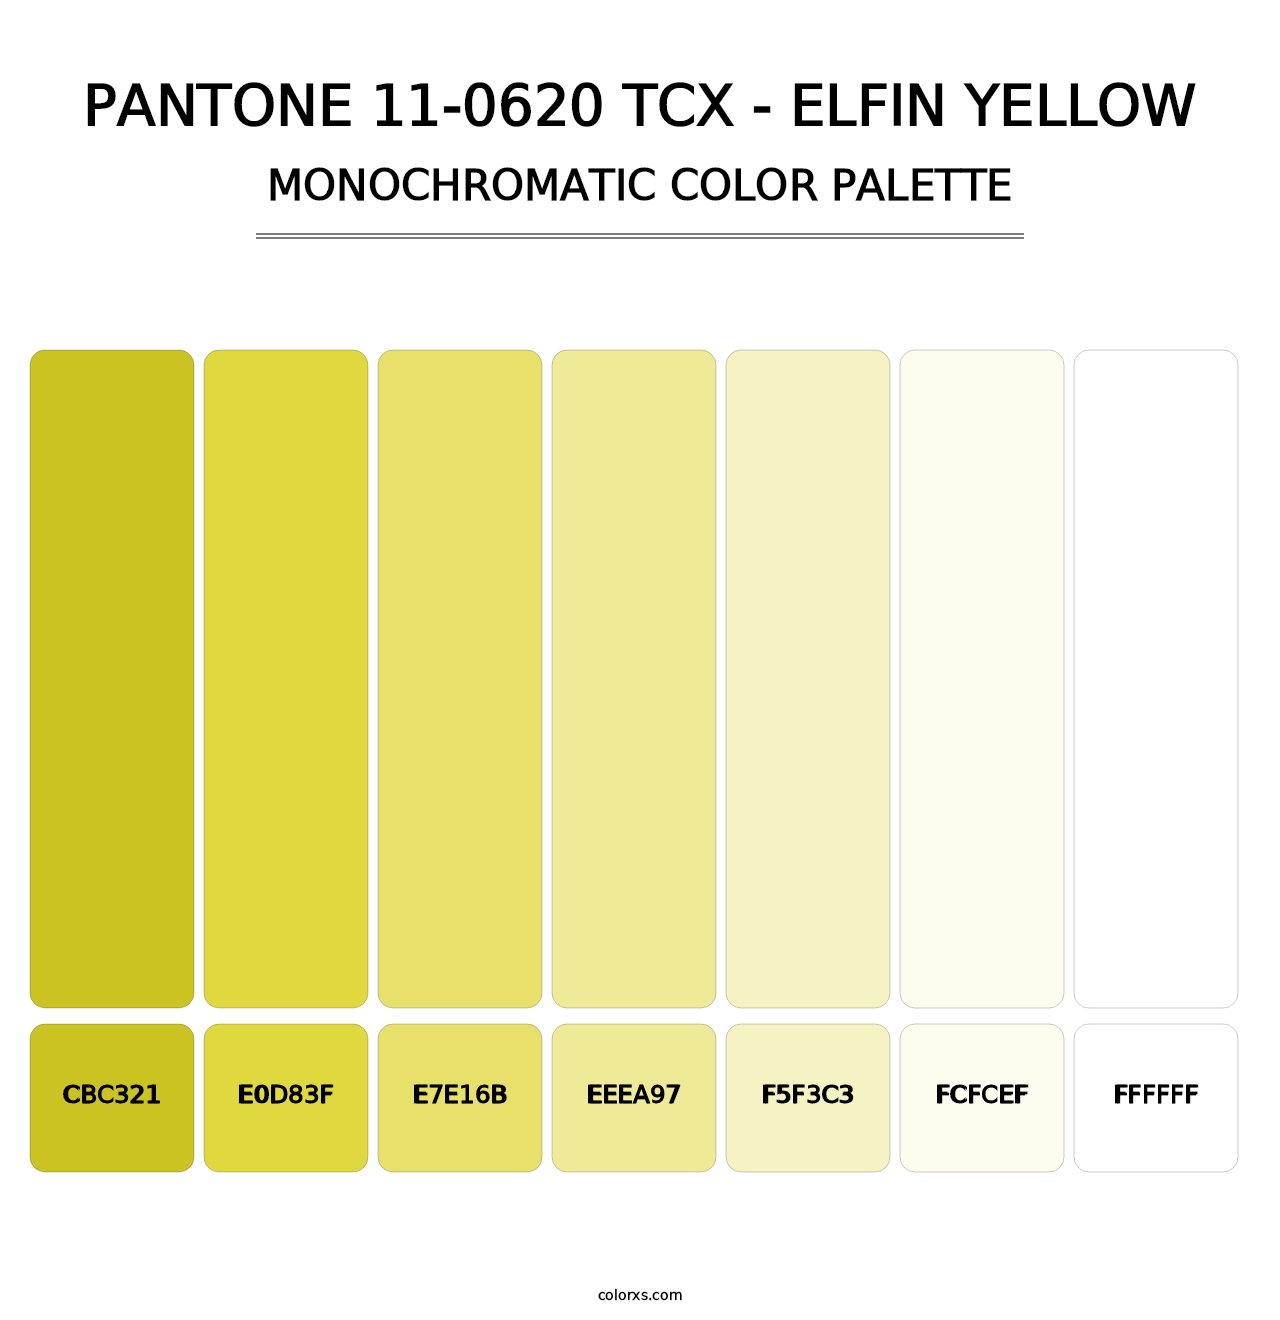 PANTONE 11-0620 TCX - Elfin Yellow - Monochromatic Color Palette